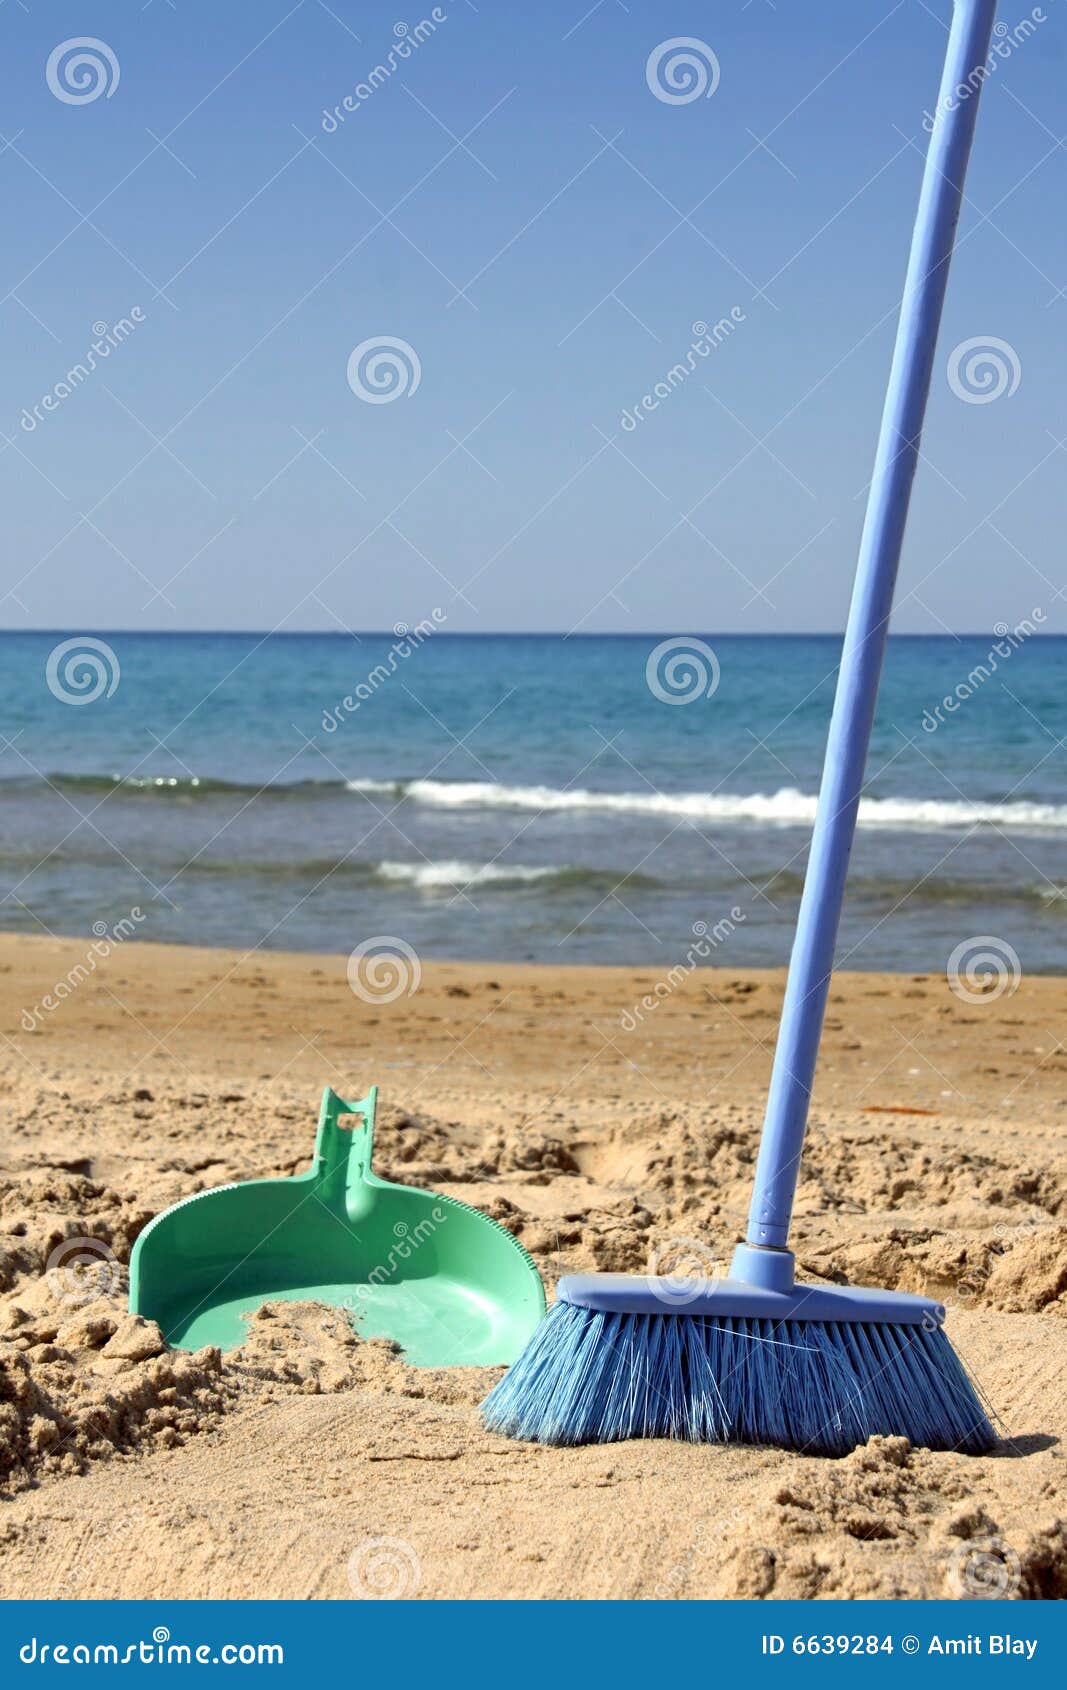 sweeping the beach (irony)